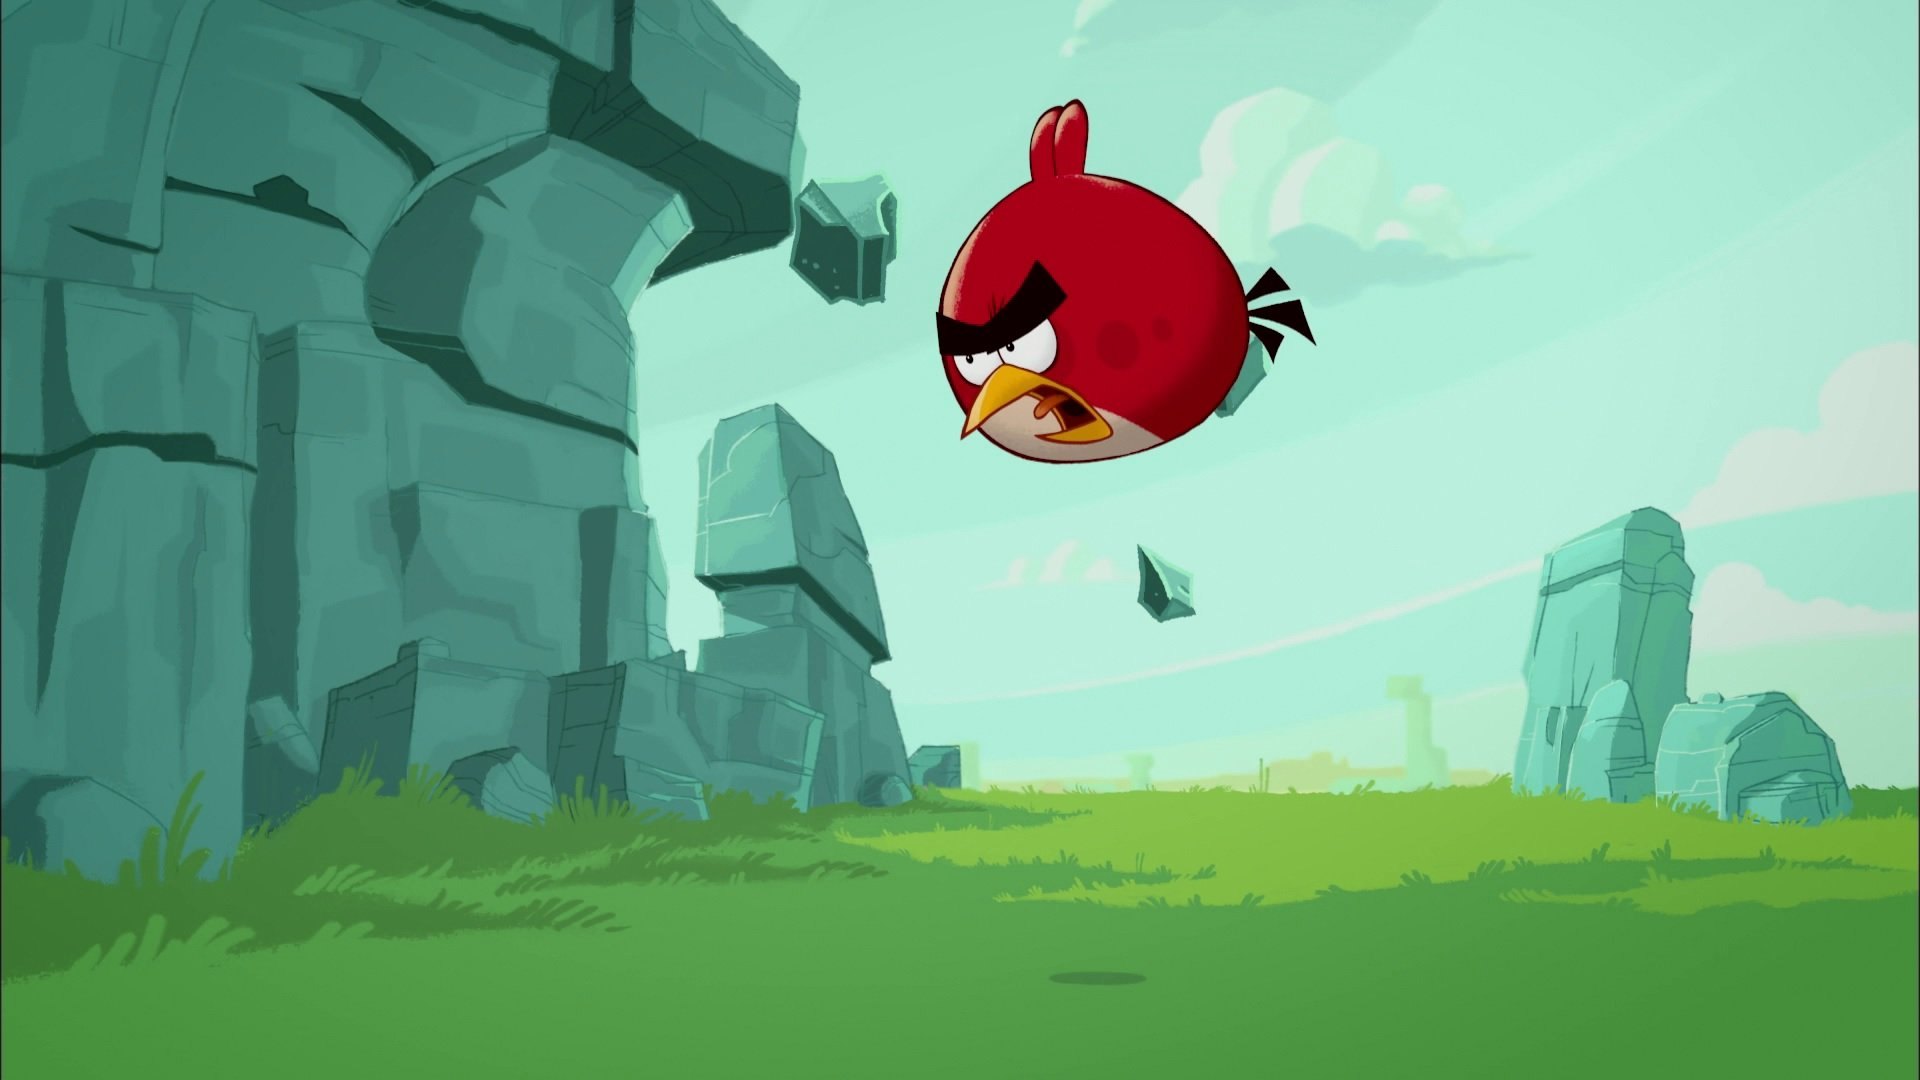 Angry birds 1.5 2. Птички Энгри бердз. Энгри бёрдз злые птички. Энгри бердз 2 2.0.1. Angry Birds 2 игра птички.